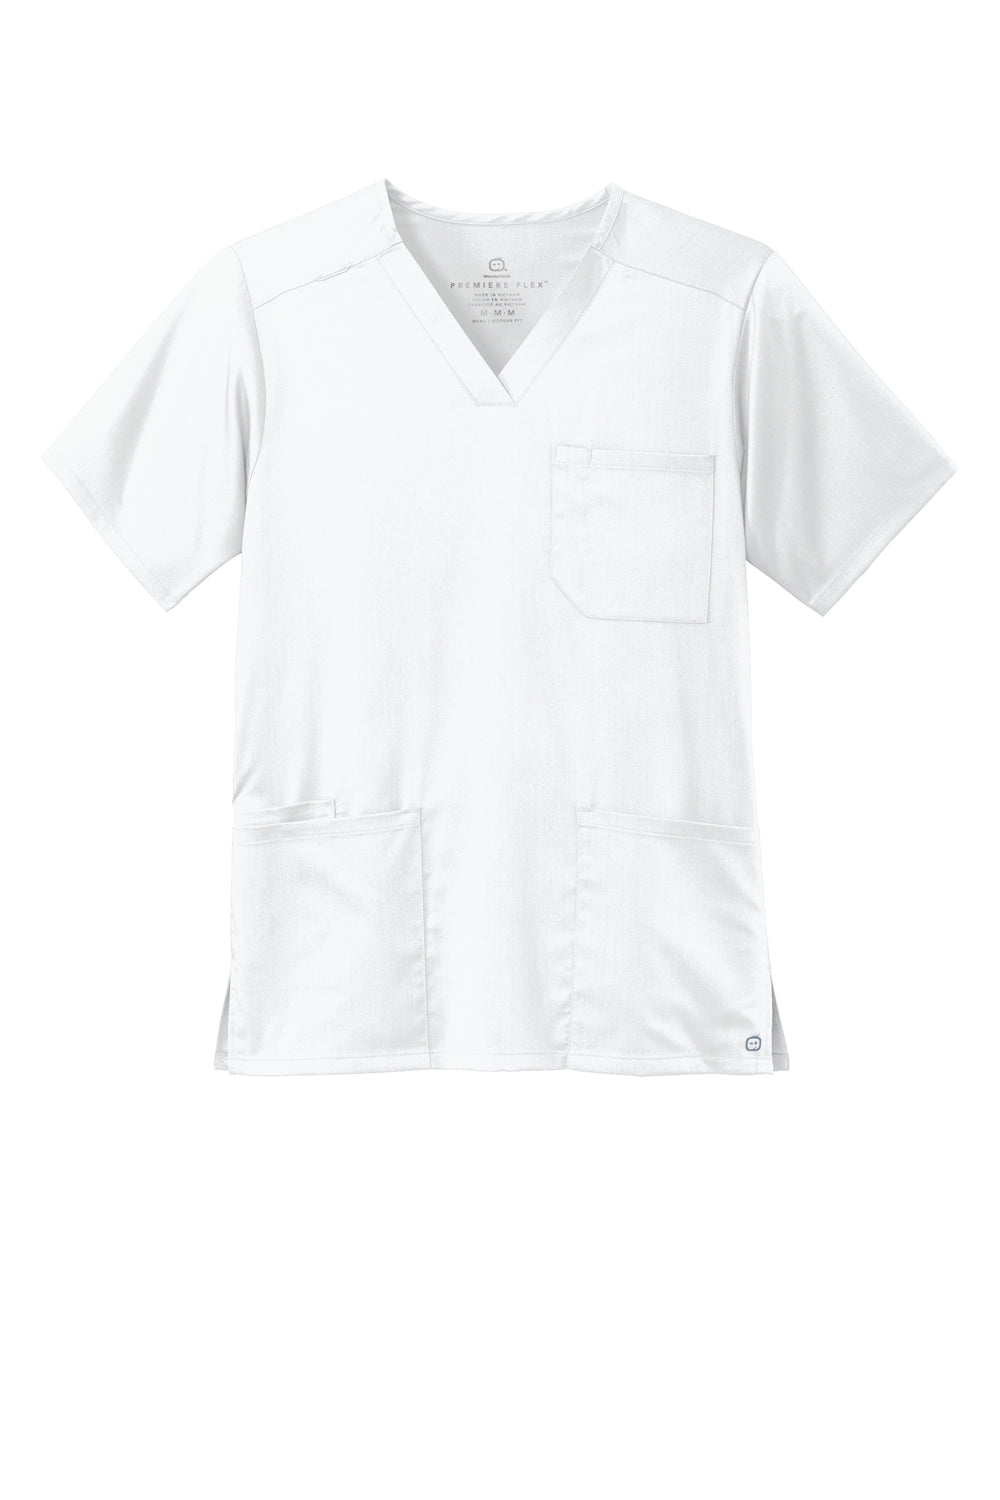 Wonderwink WW5068 Premiere Flex Short Sleeve V-Neck Shirt White Flat Front